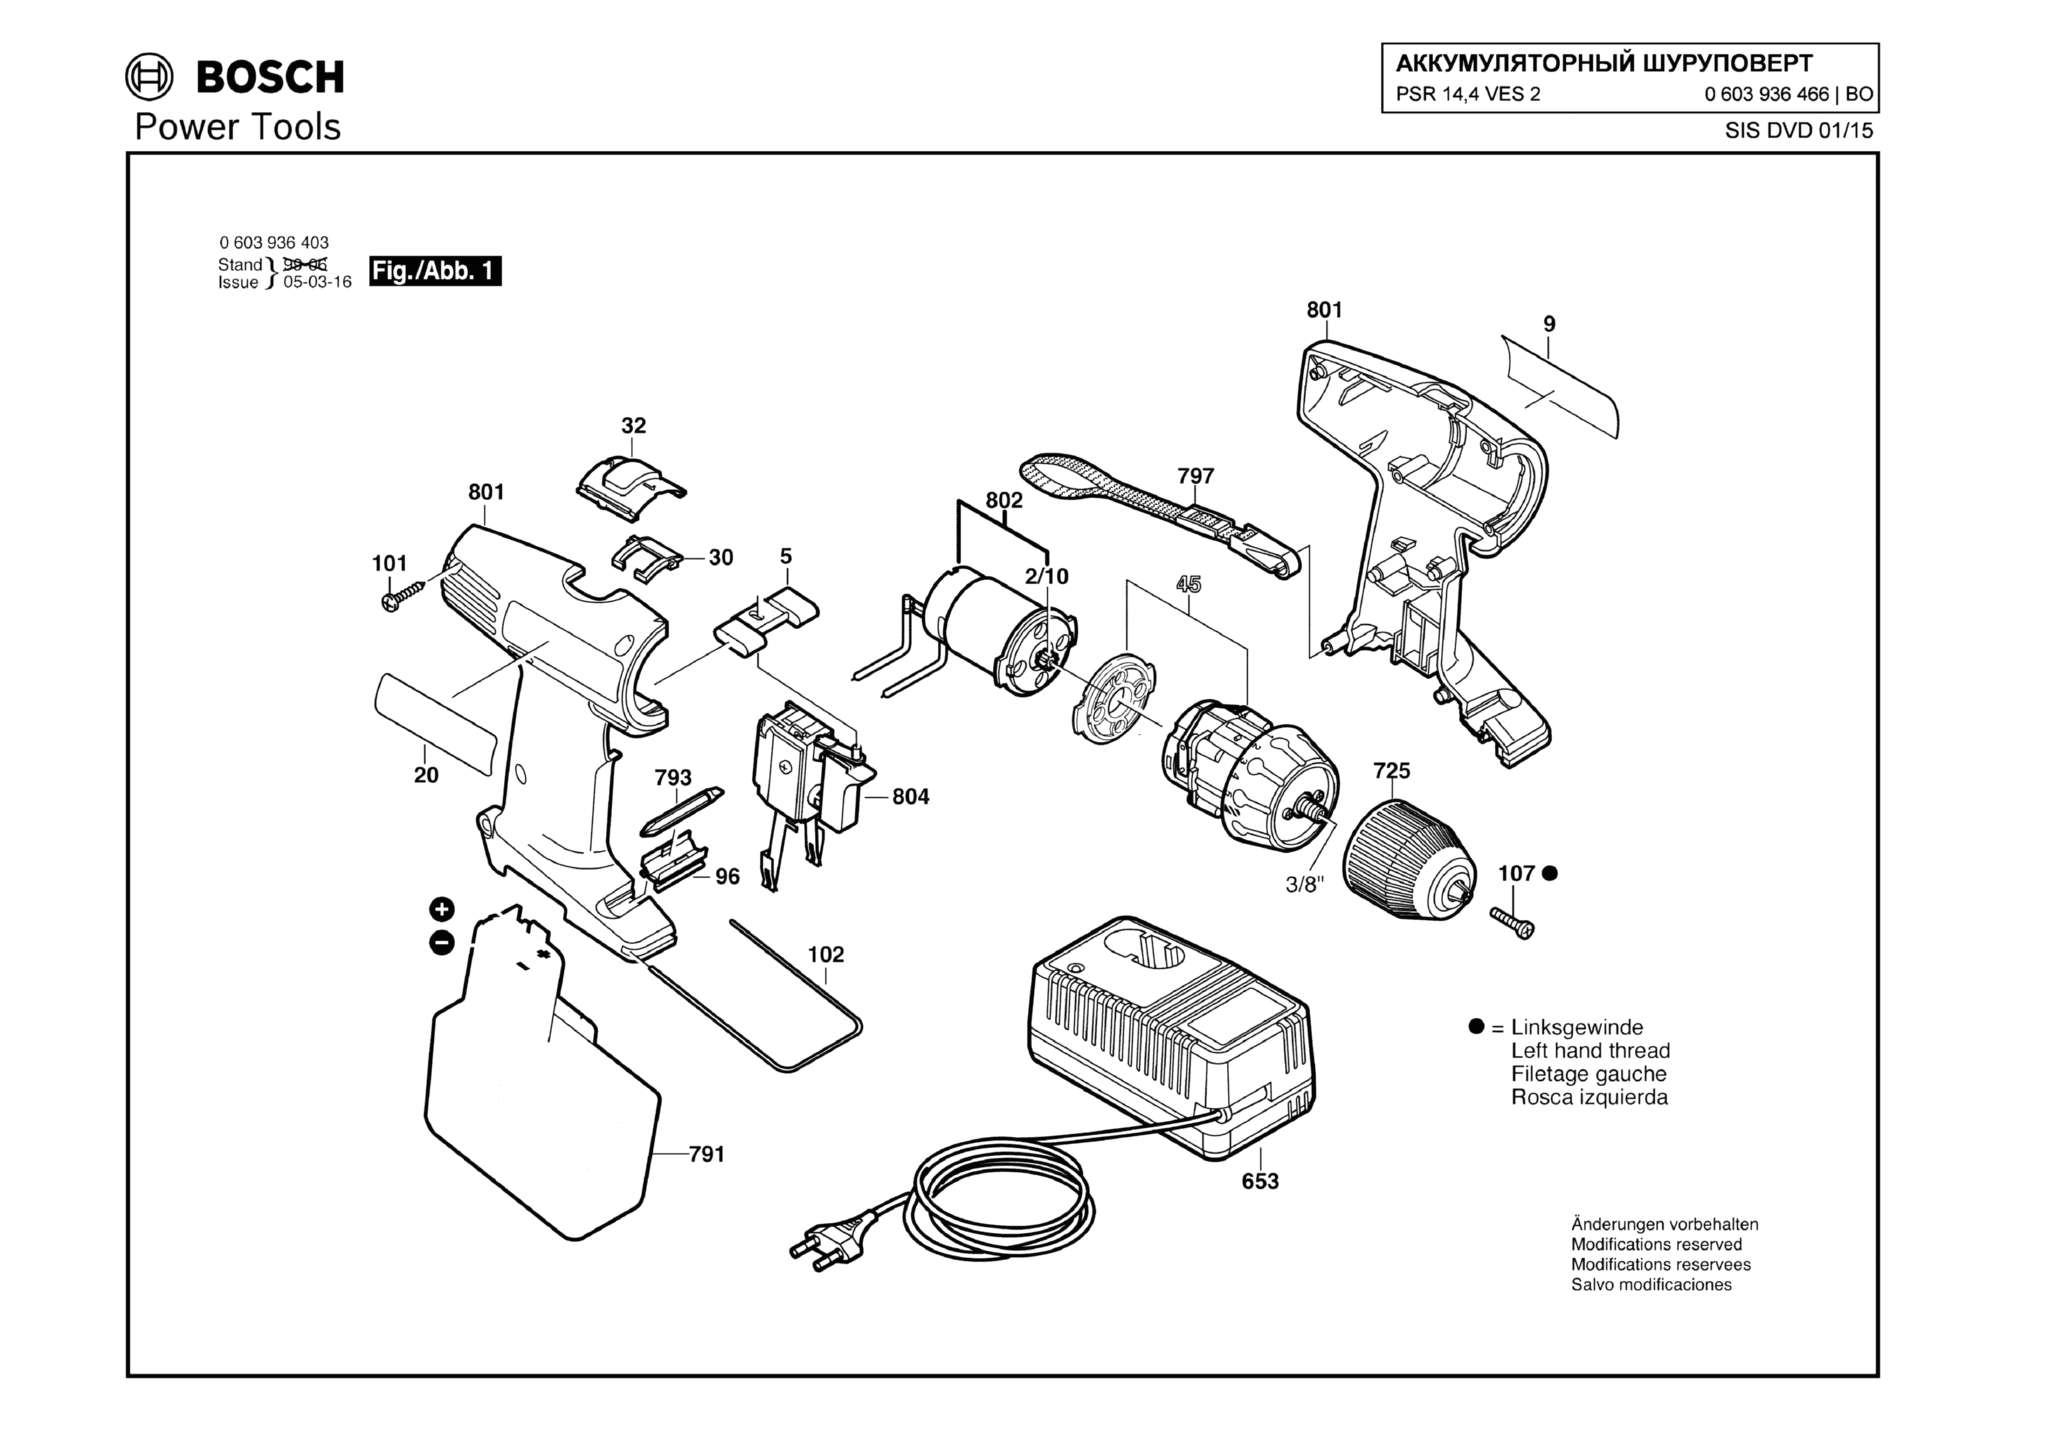 Запчасти, схема и деталировка Bosch PSR 14,4 VES 2 (ТИП 0603936466)